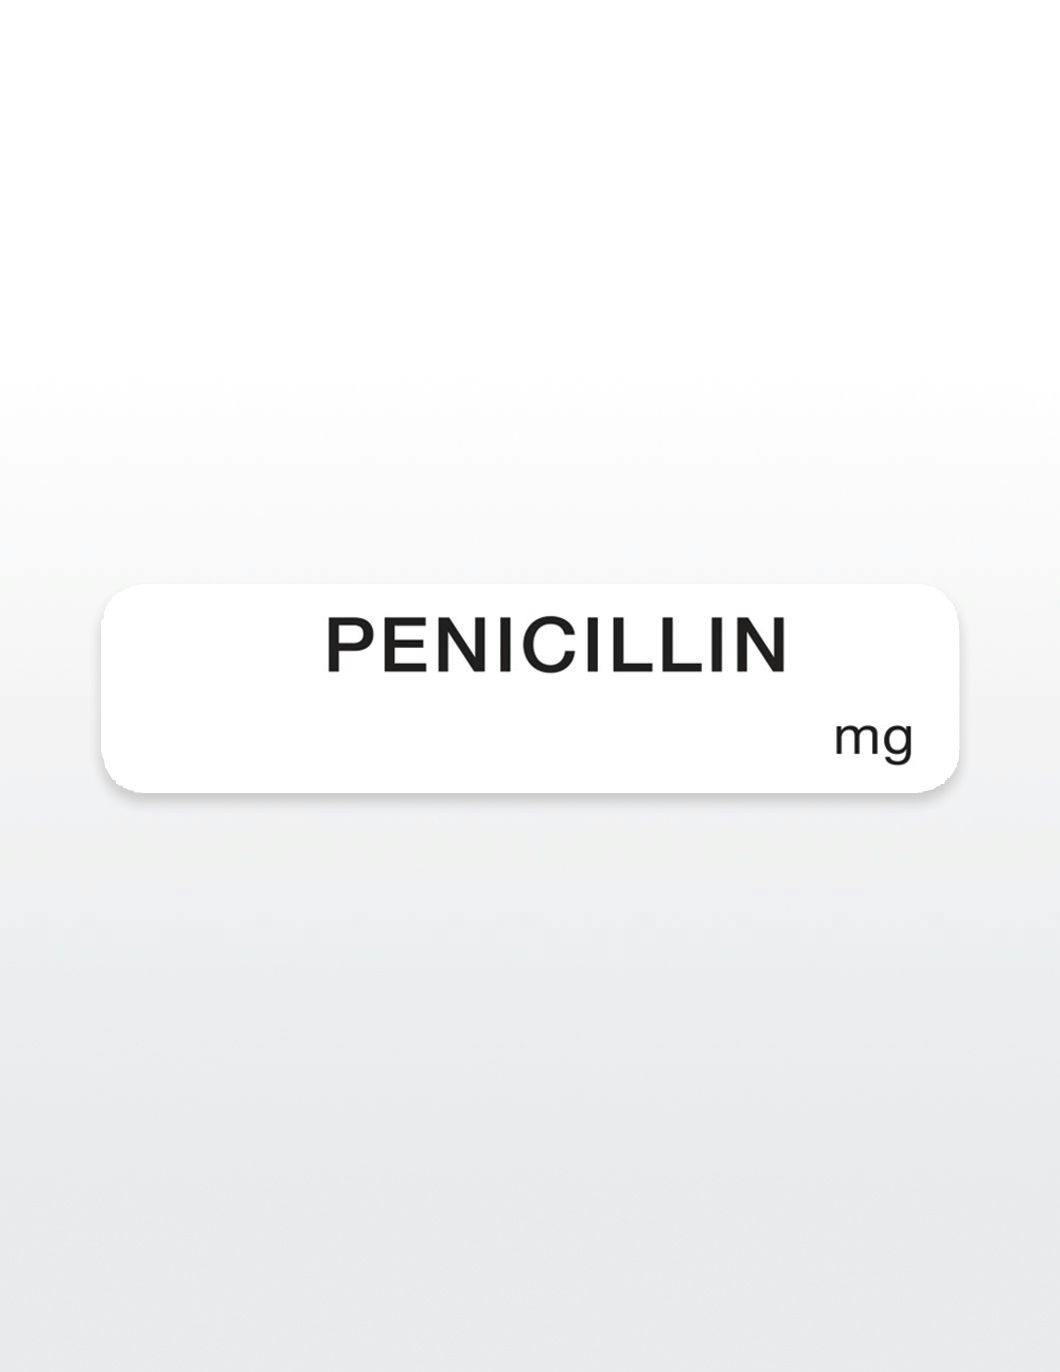 penicillin-drug-syringe-stickers